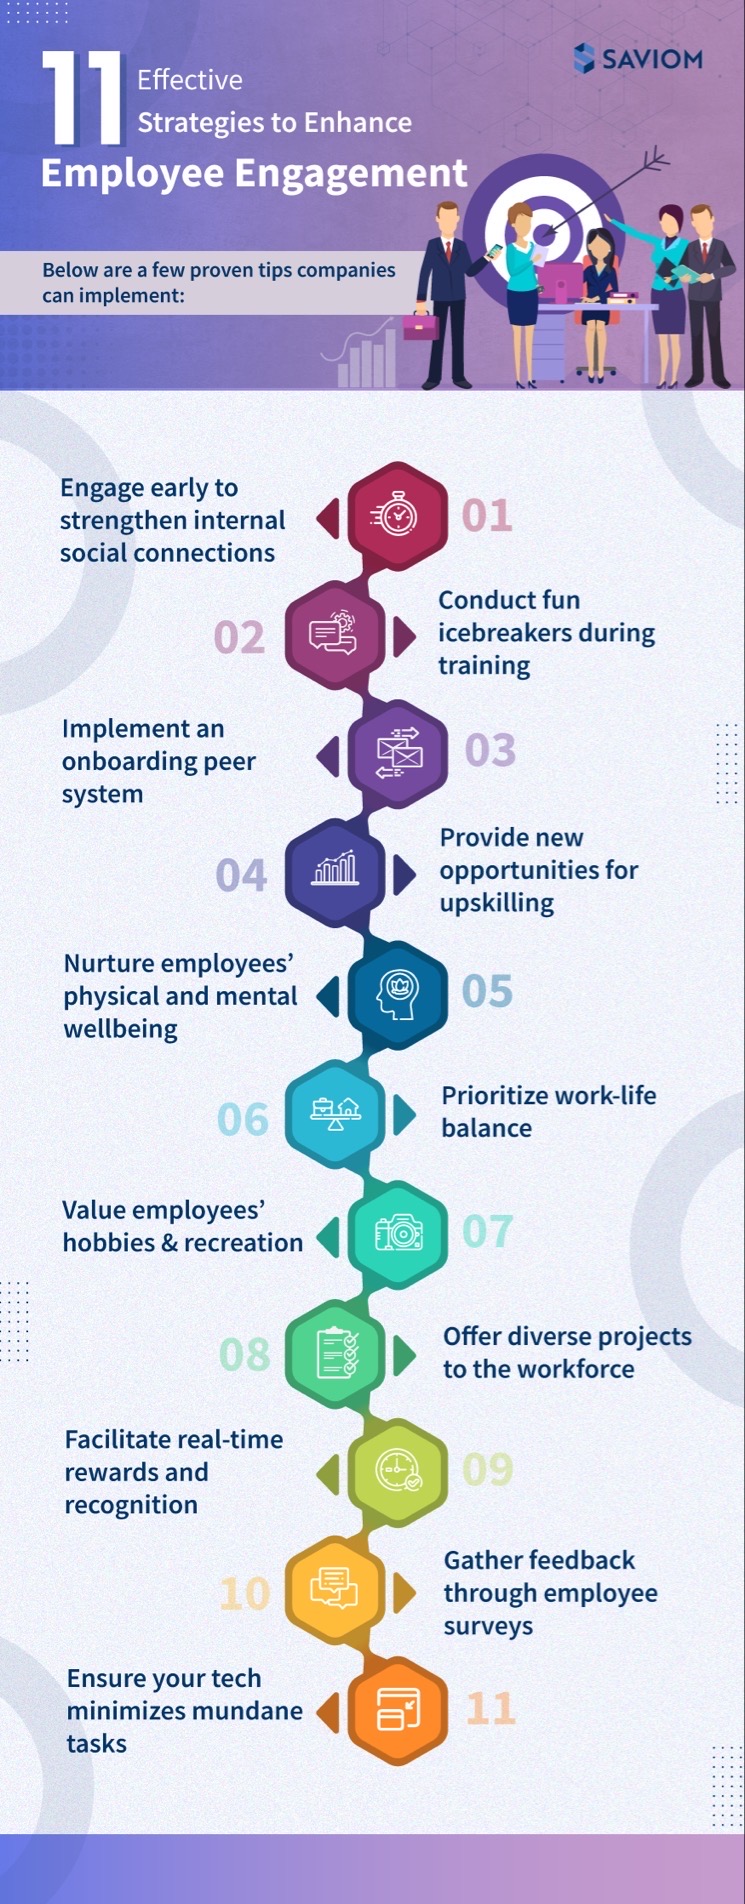 11 Effective Strategies to Enhance Employee Engagement